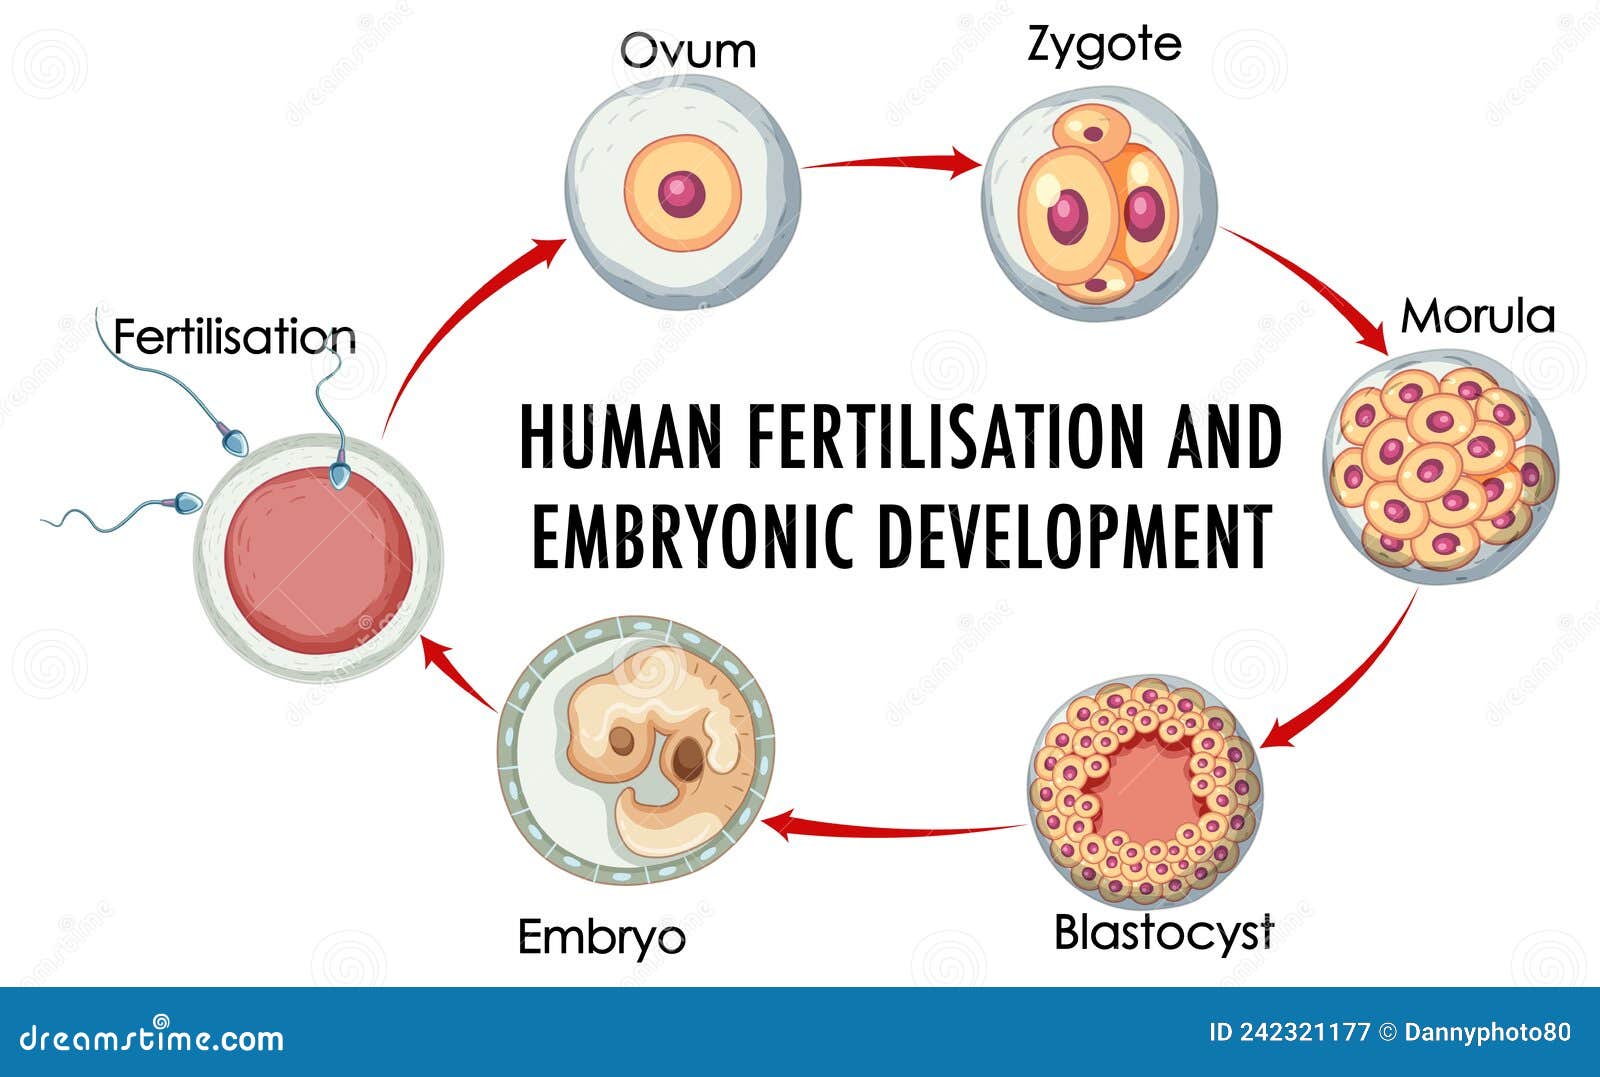 Human Fertilisation Embryonic Development In Human Infographic Stock